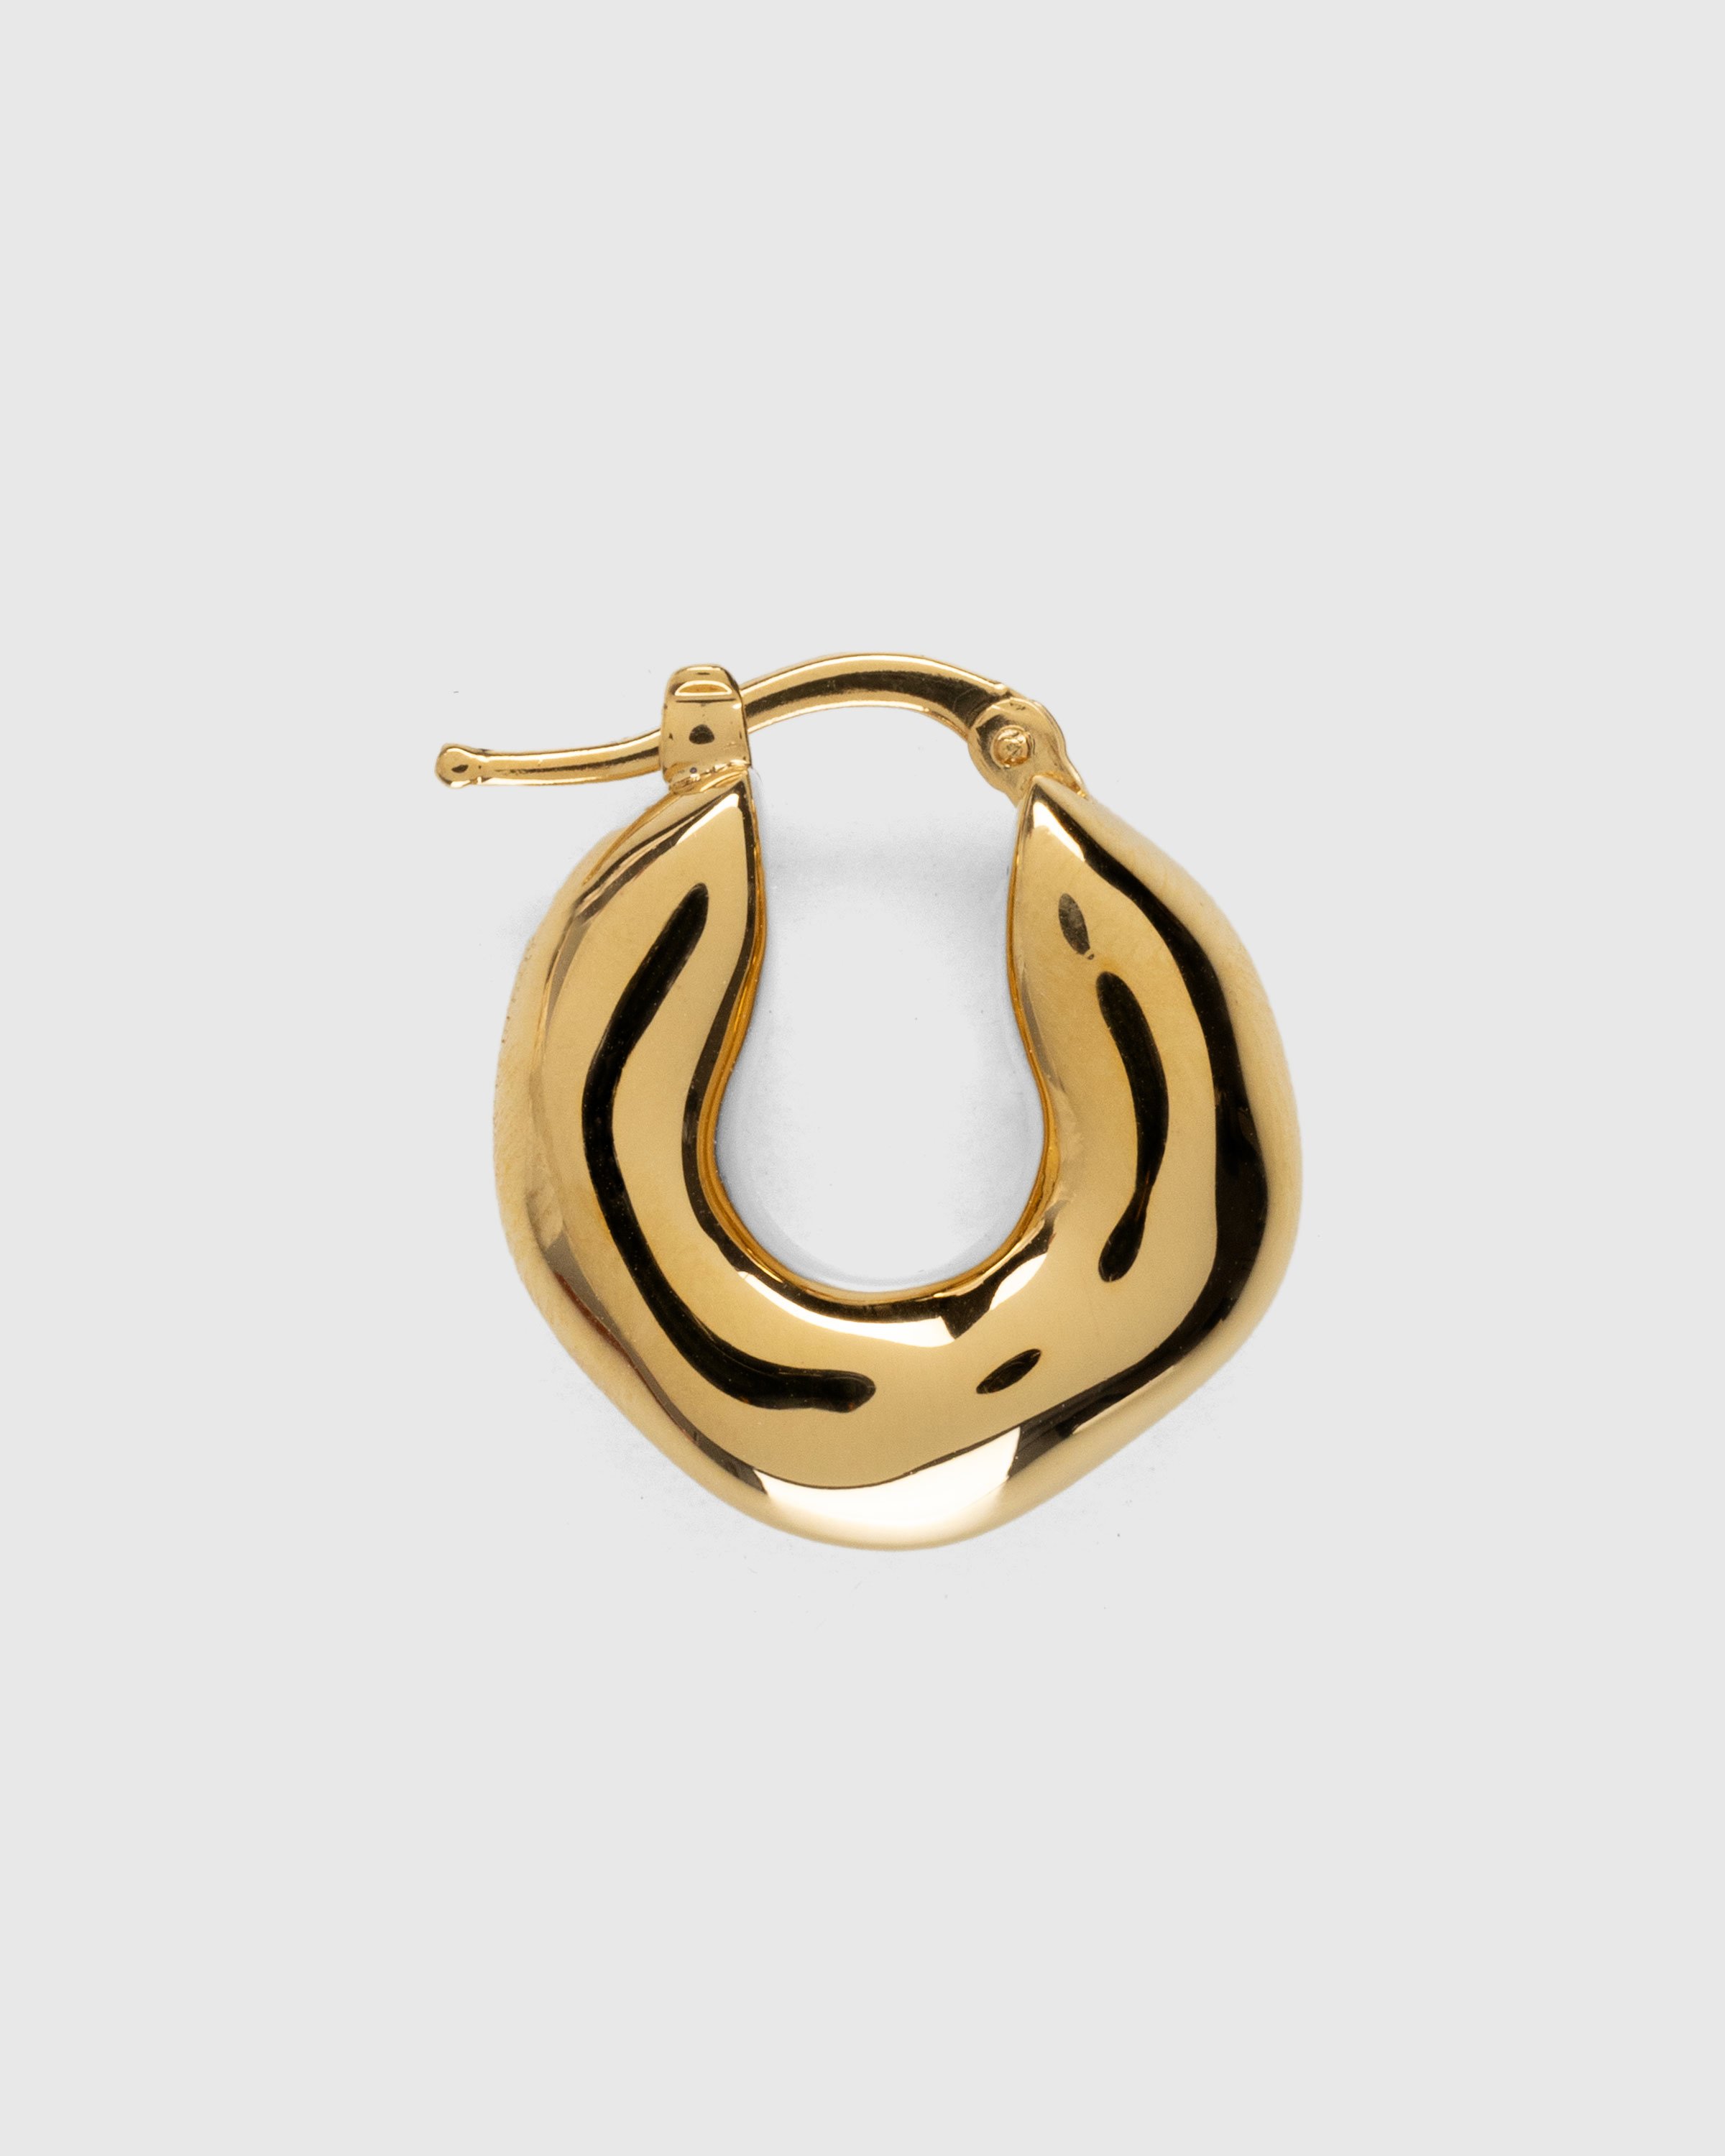 Jil Sander – New Lightness Earring Gold | Highsnobiety Shop